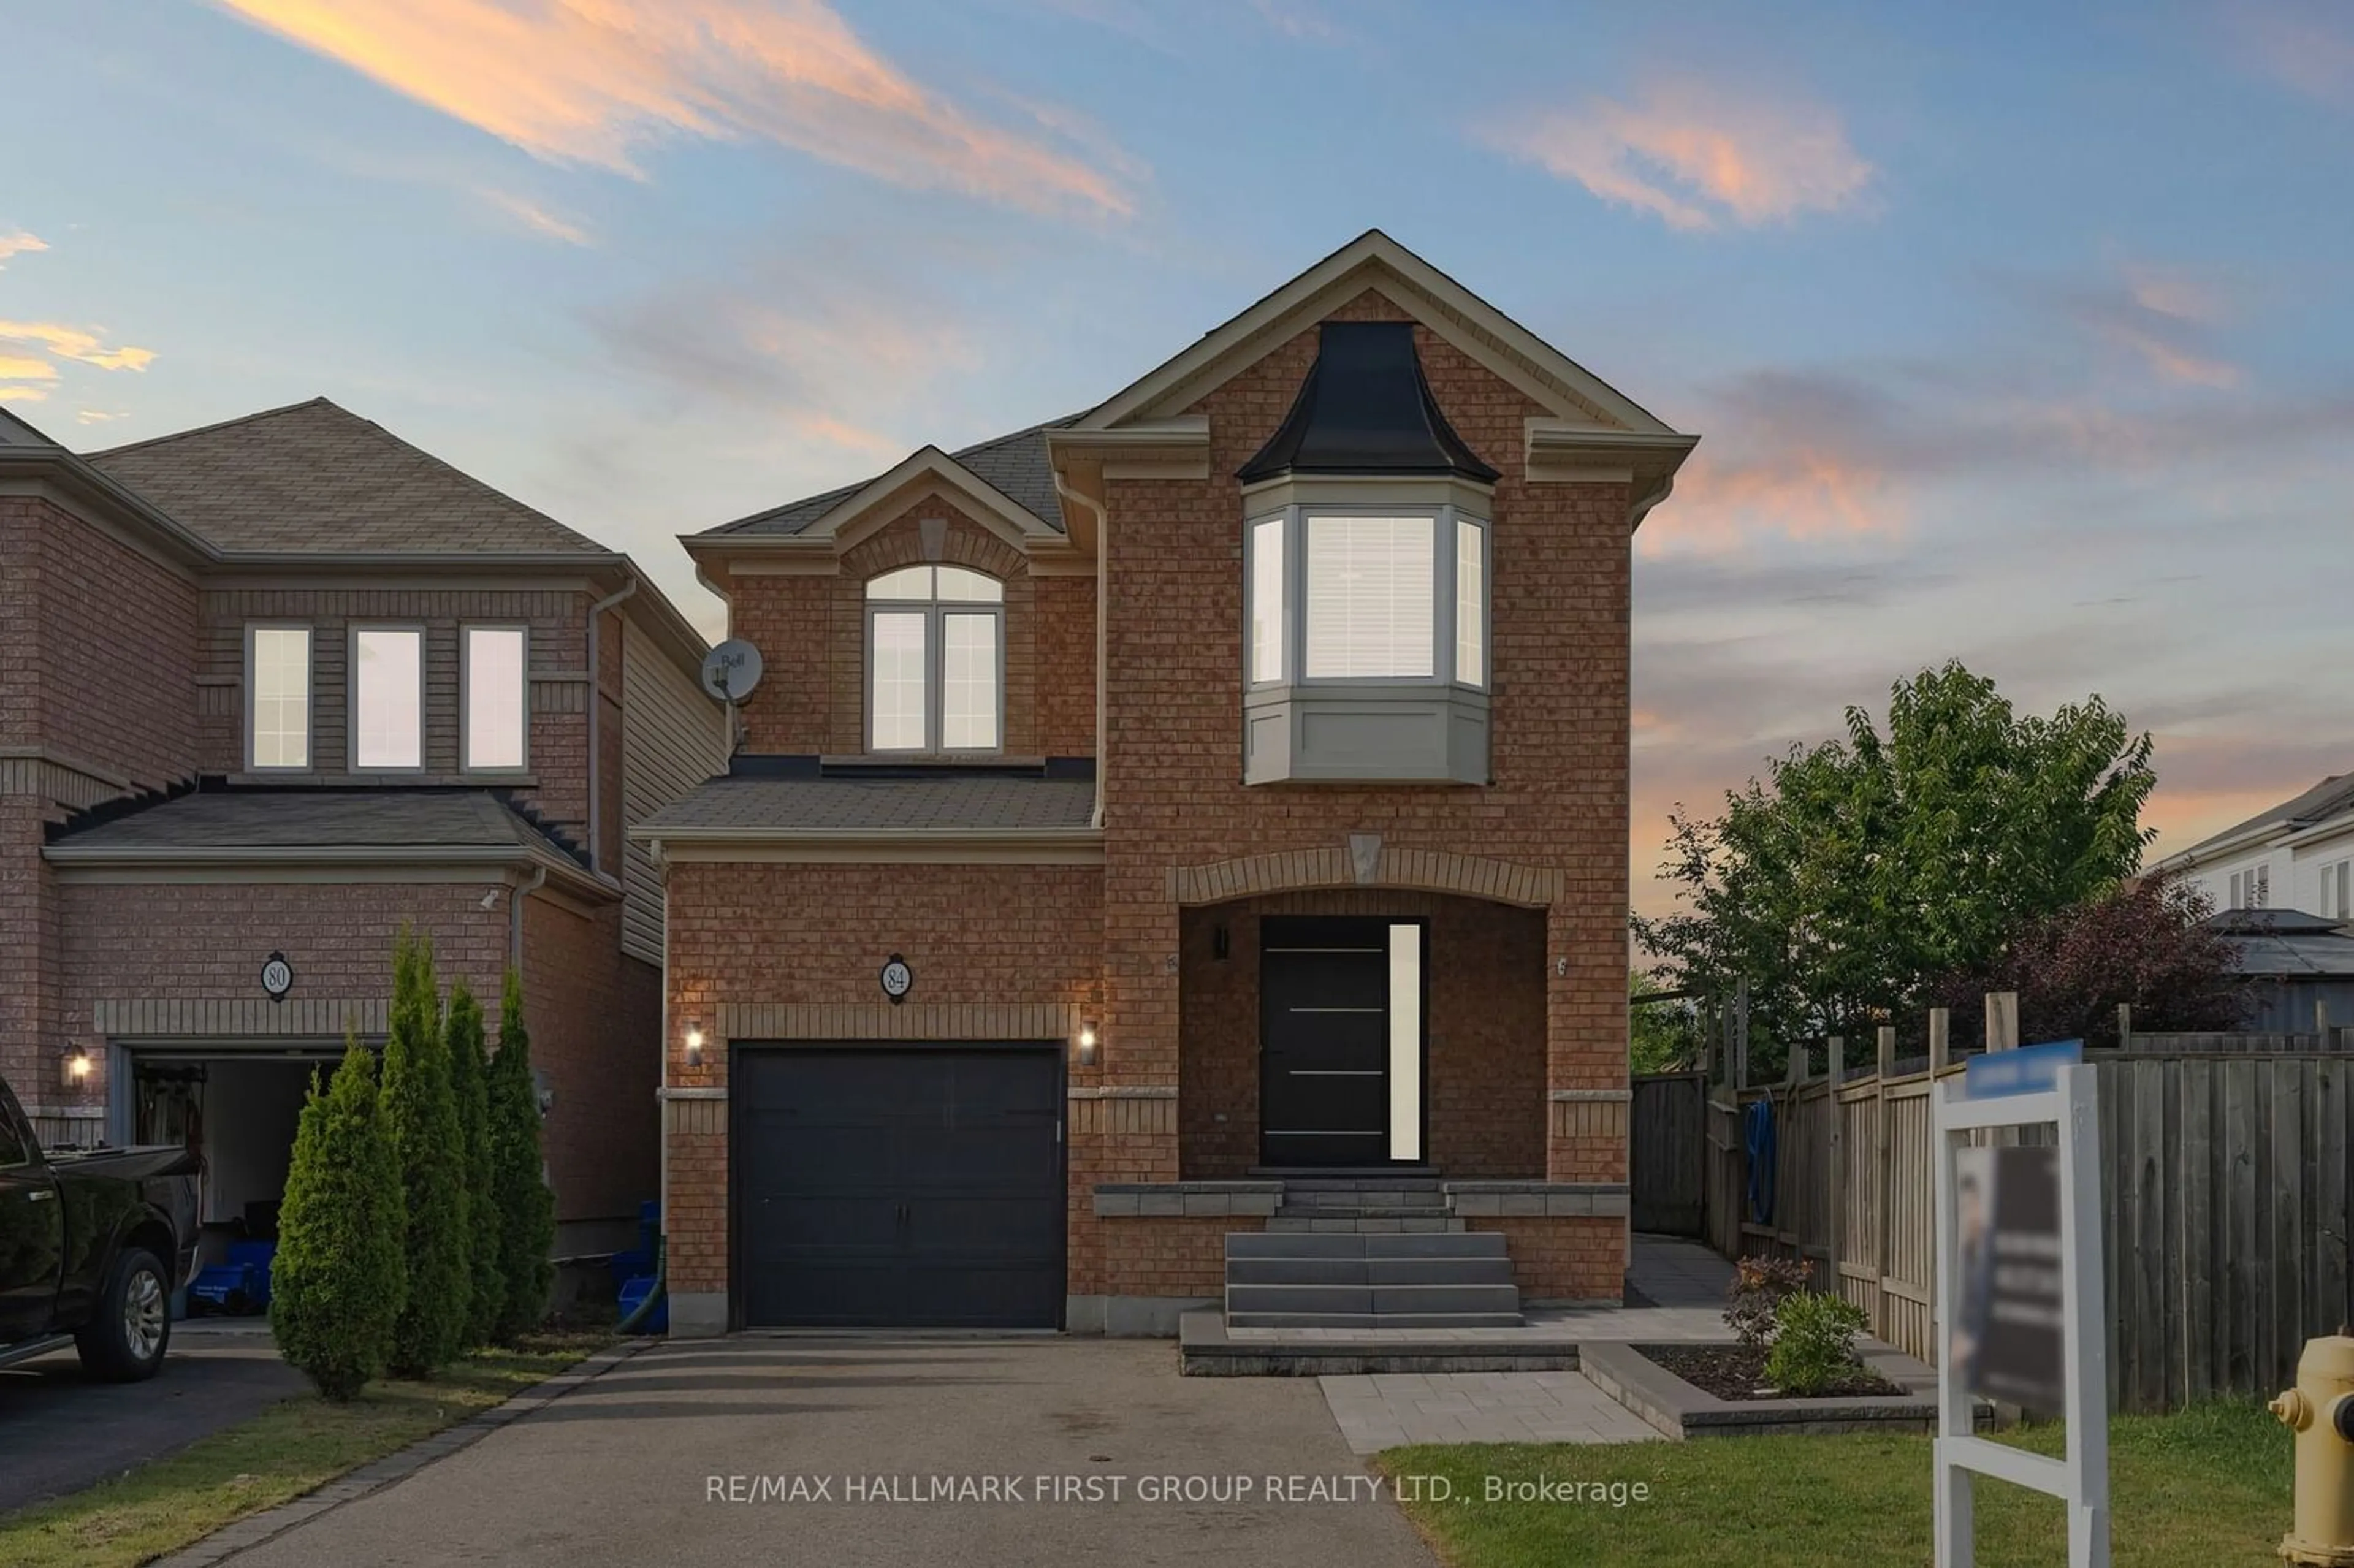 Home with brick exterior material for 84 Bathgate Cres, Clarington Ontario L1E 0B3